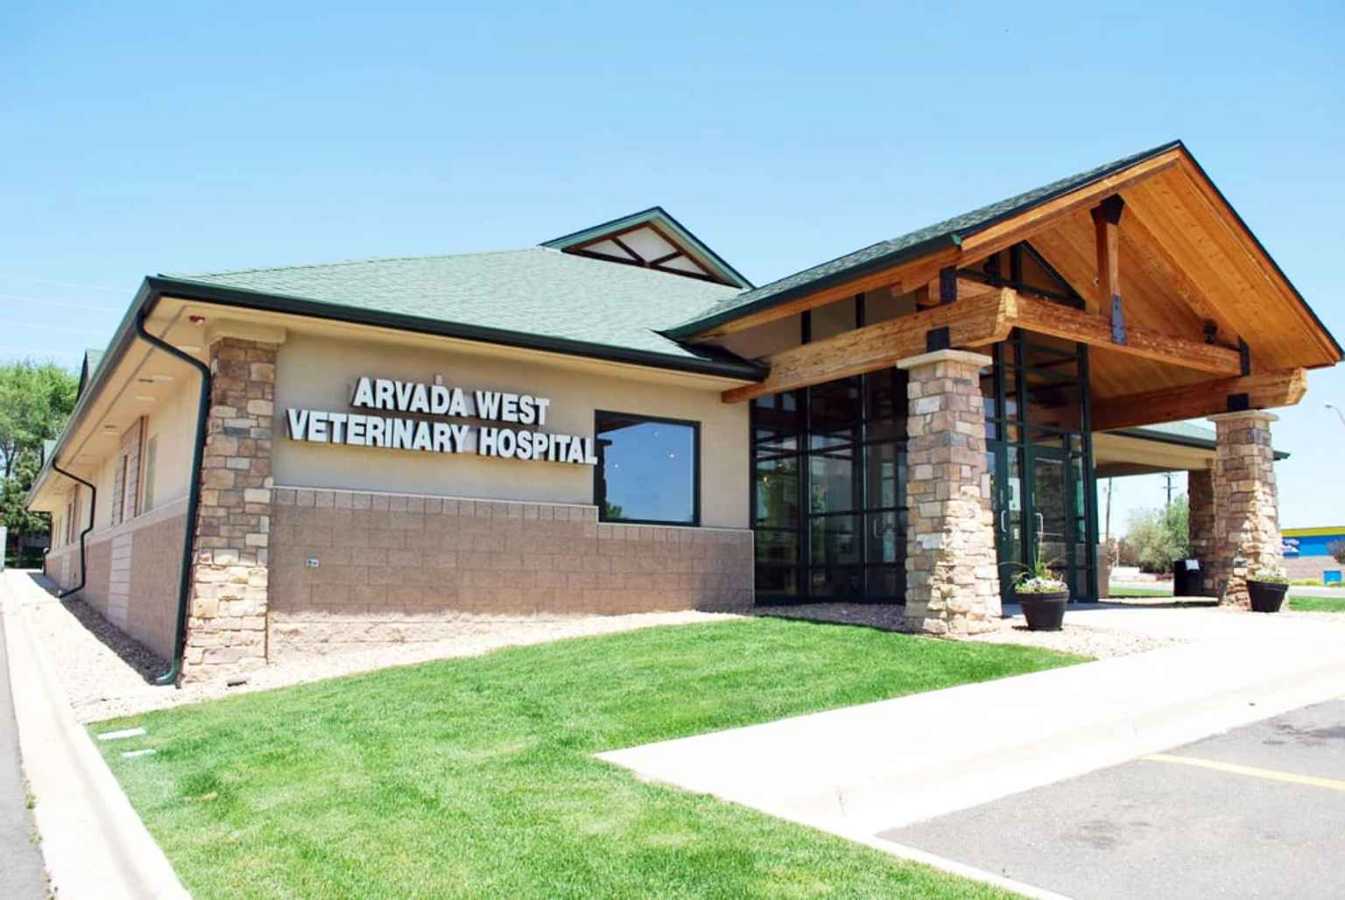 Arvada West Veterinary Hospital